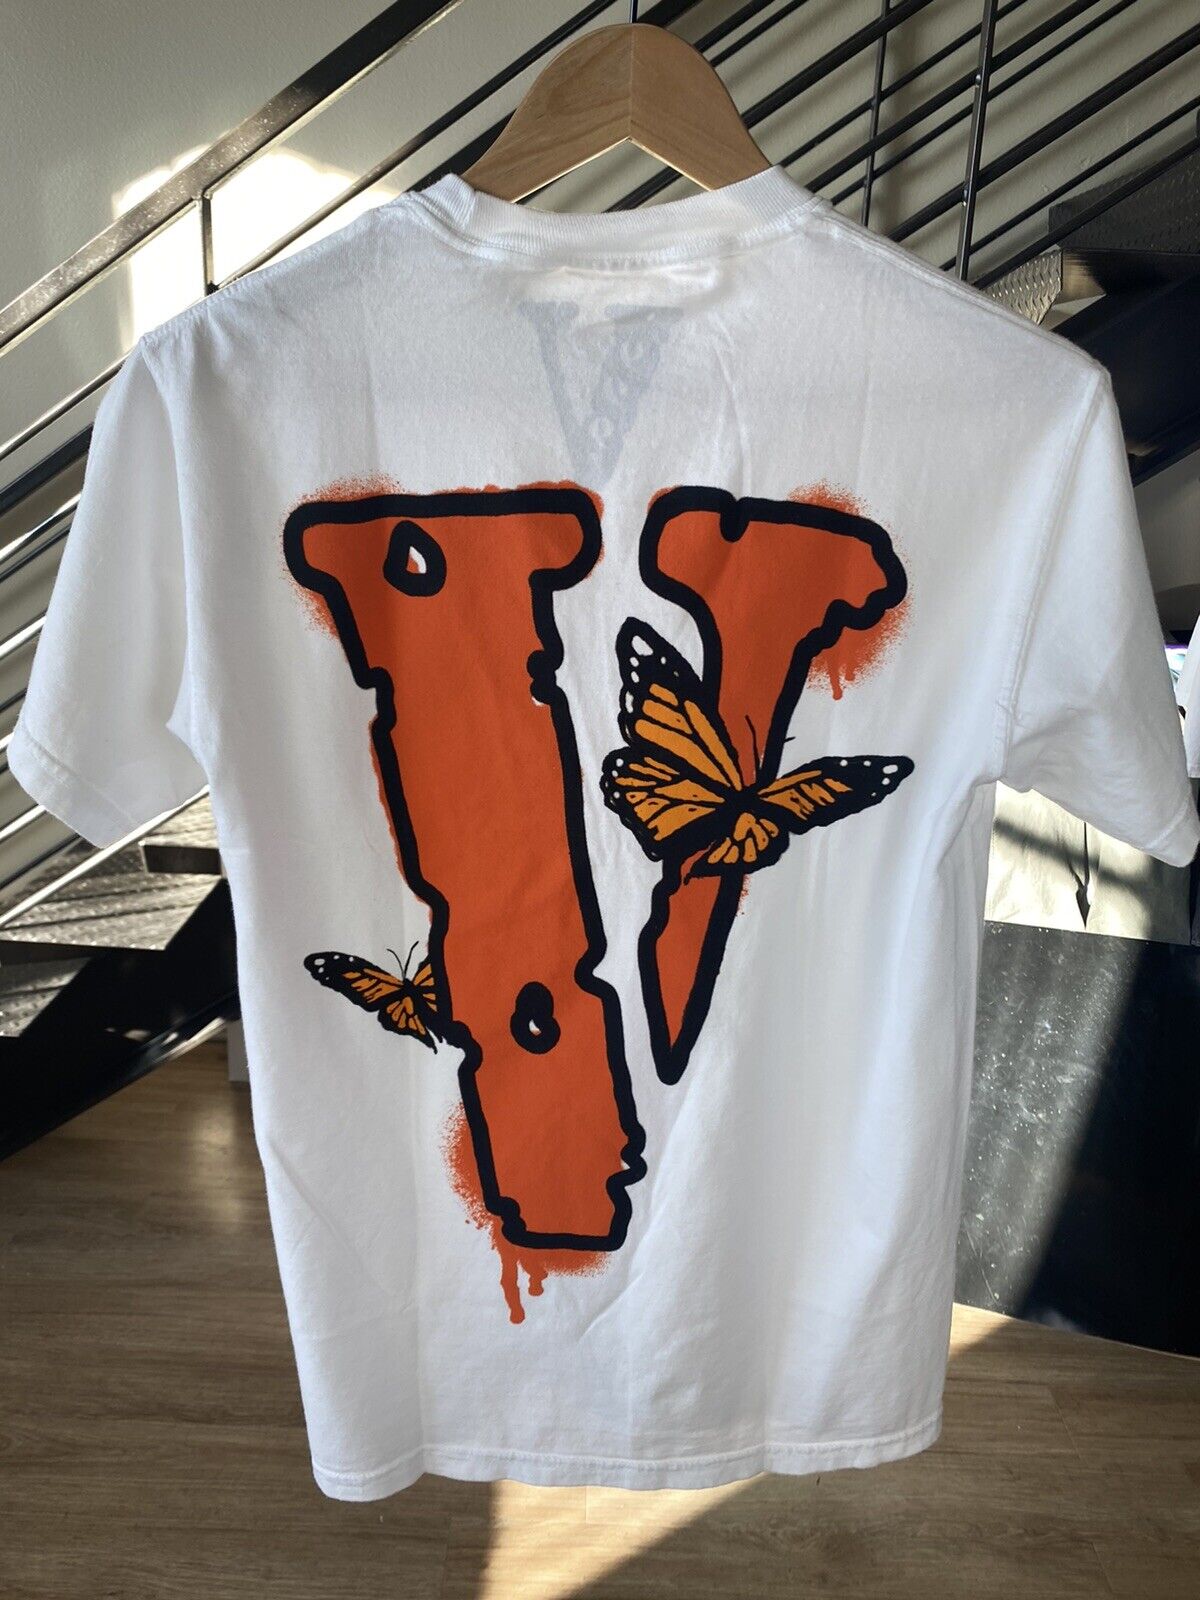 Vlone x Juice WRLD Butterfly T-Shirt 100%Authentic Sizes S-L